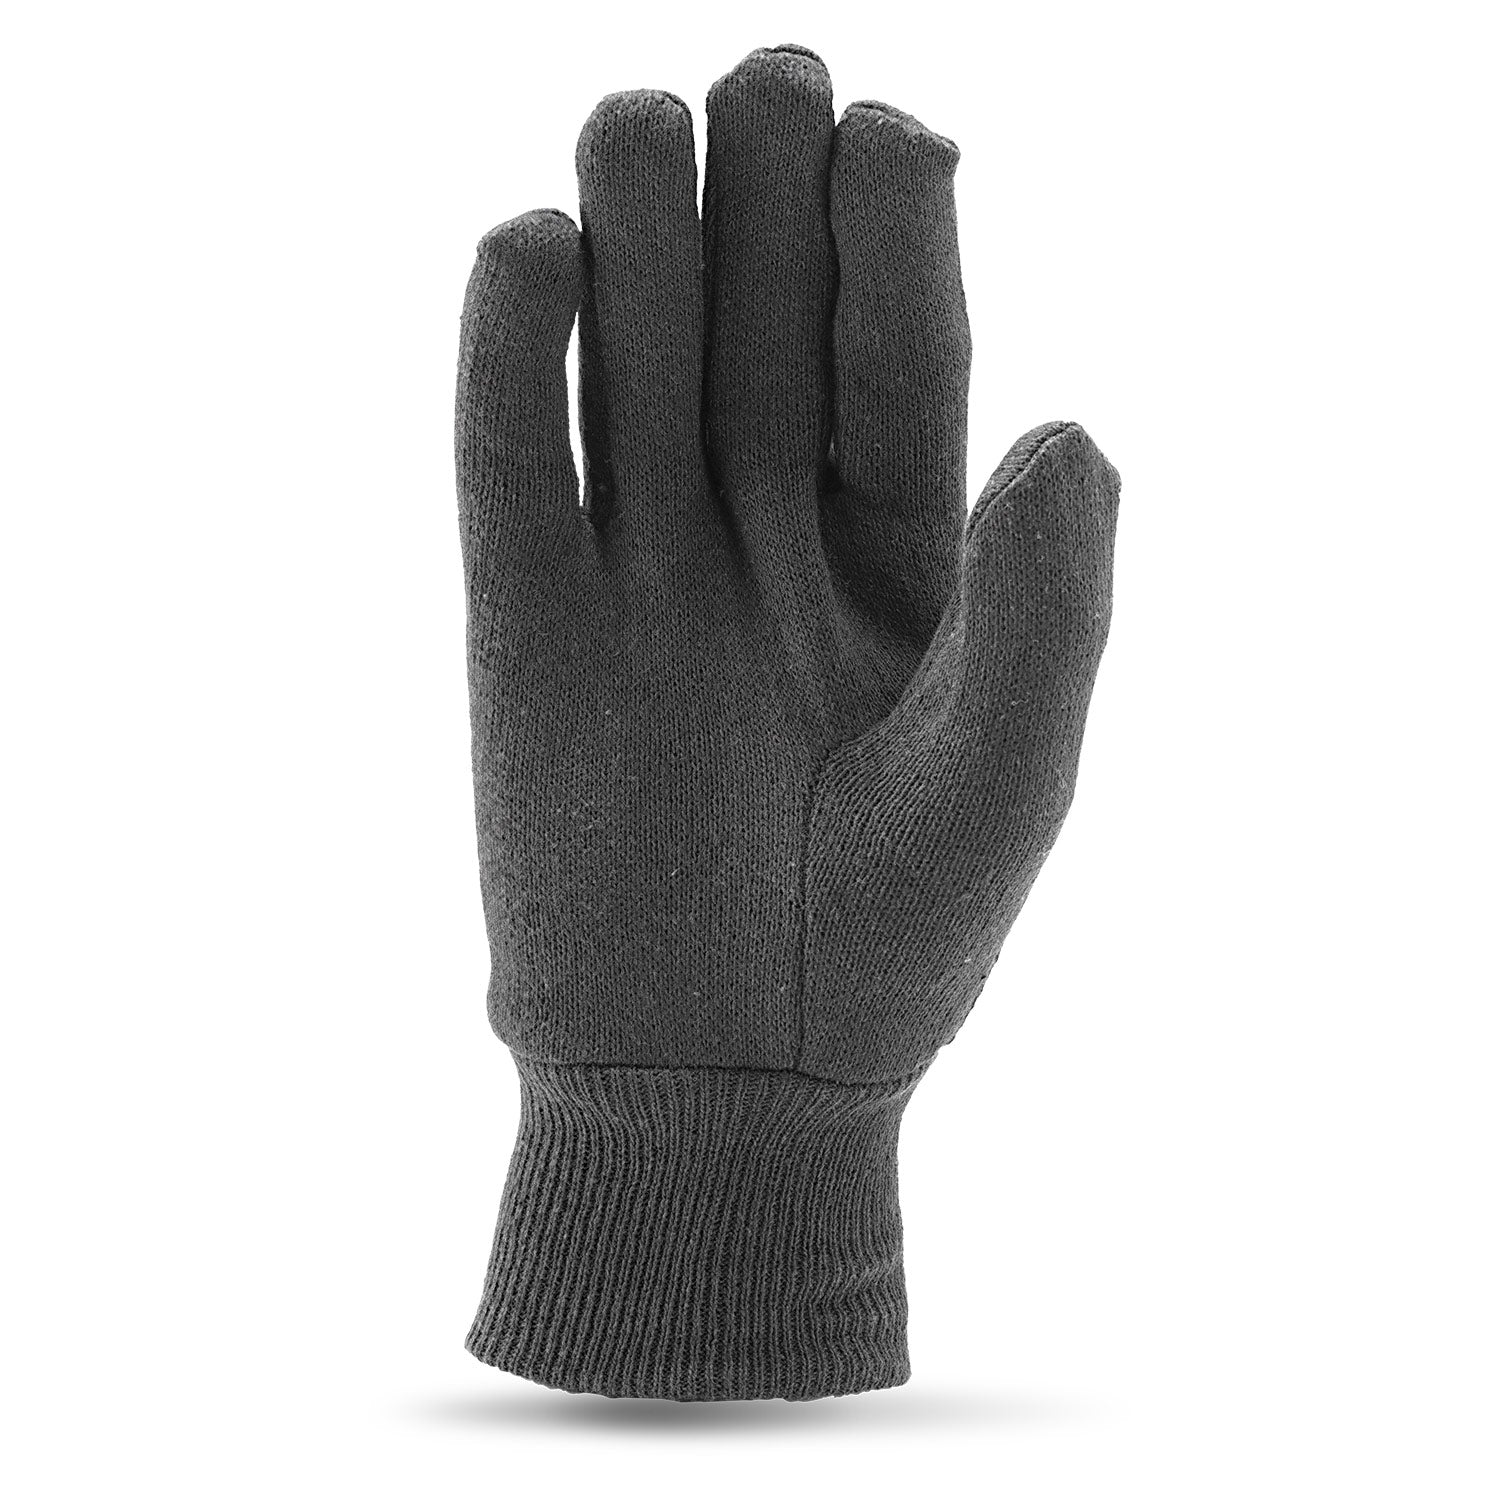 LIFT Safety - Cotton Utility Glove